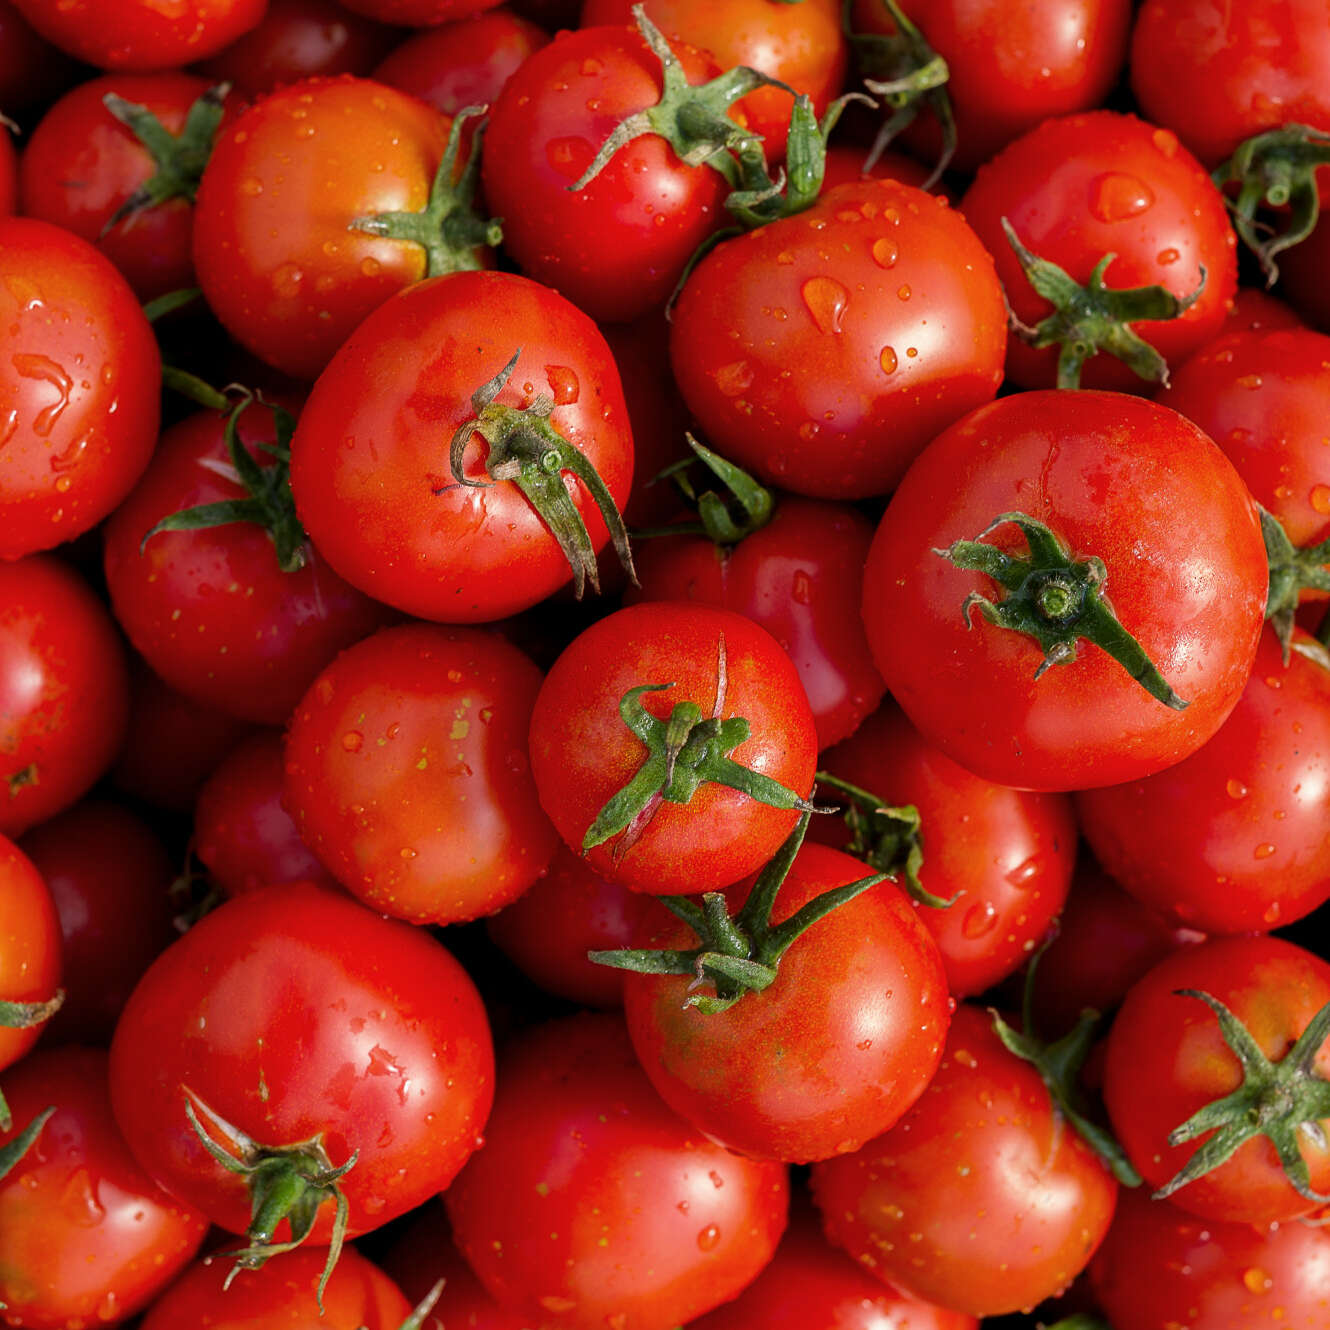 Tomates ronde